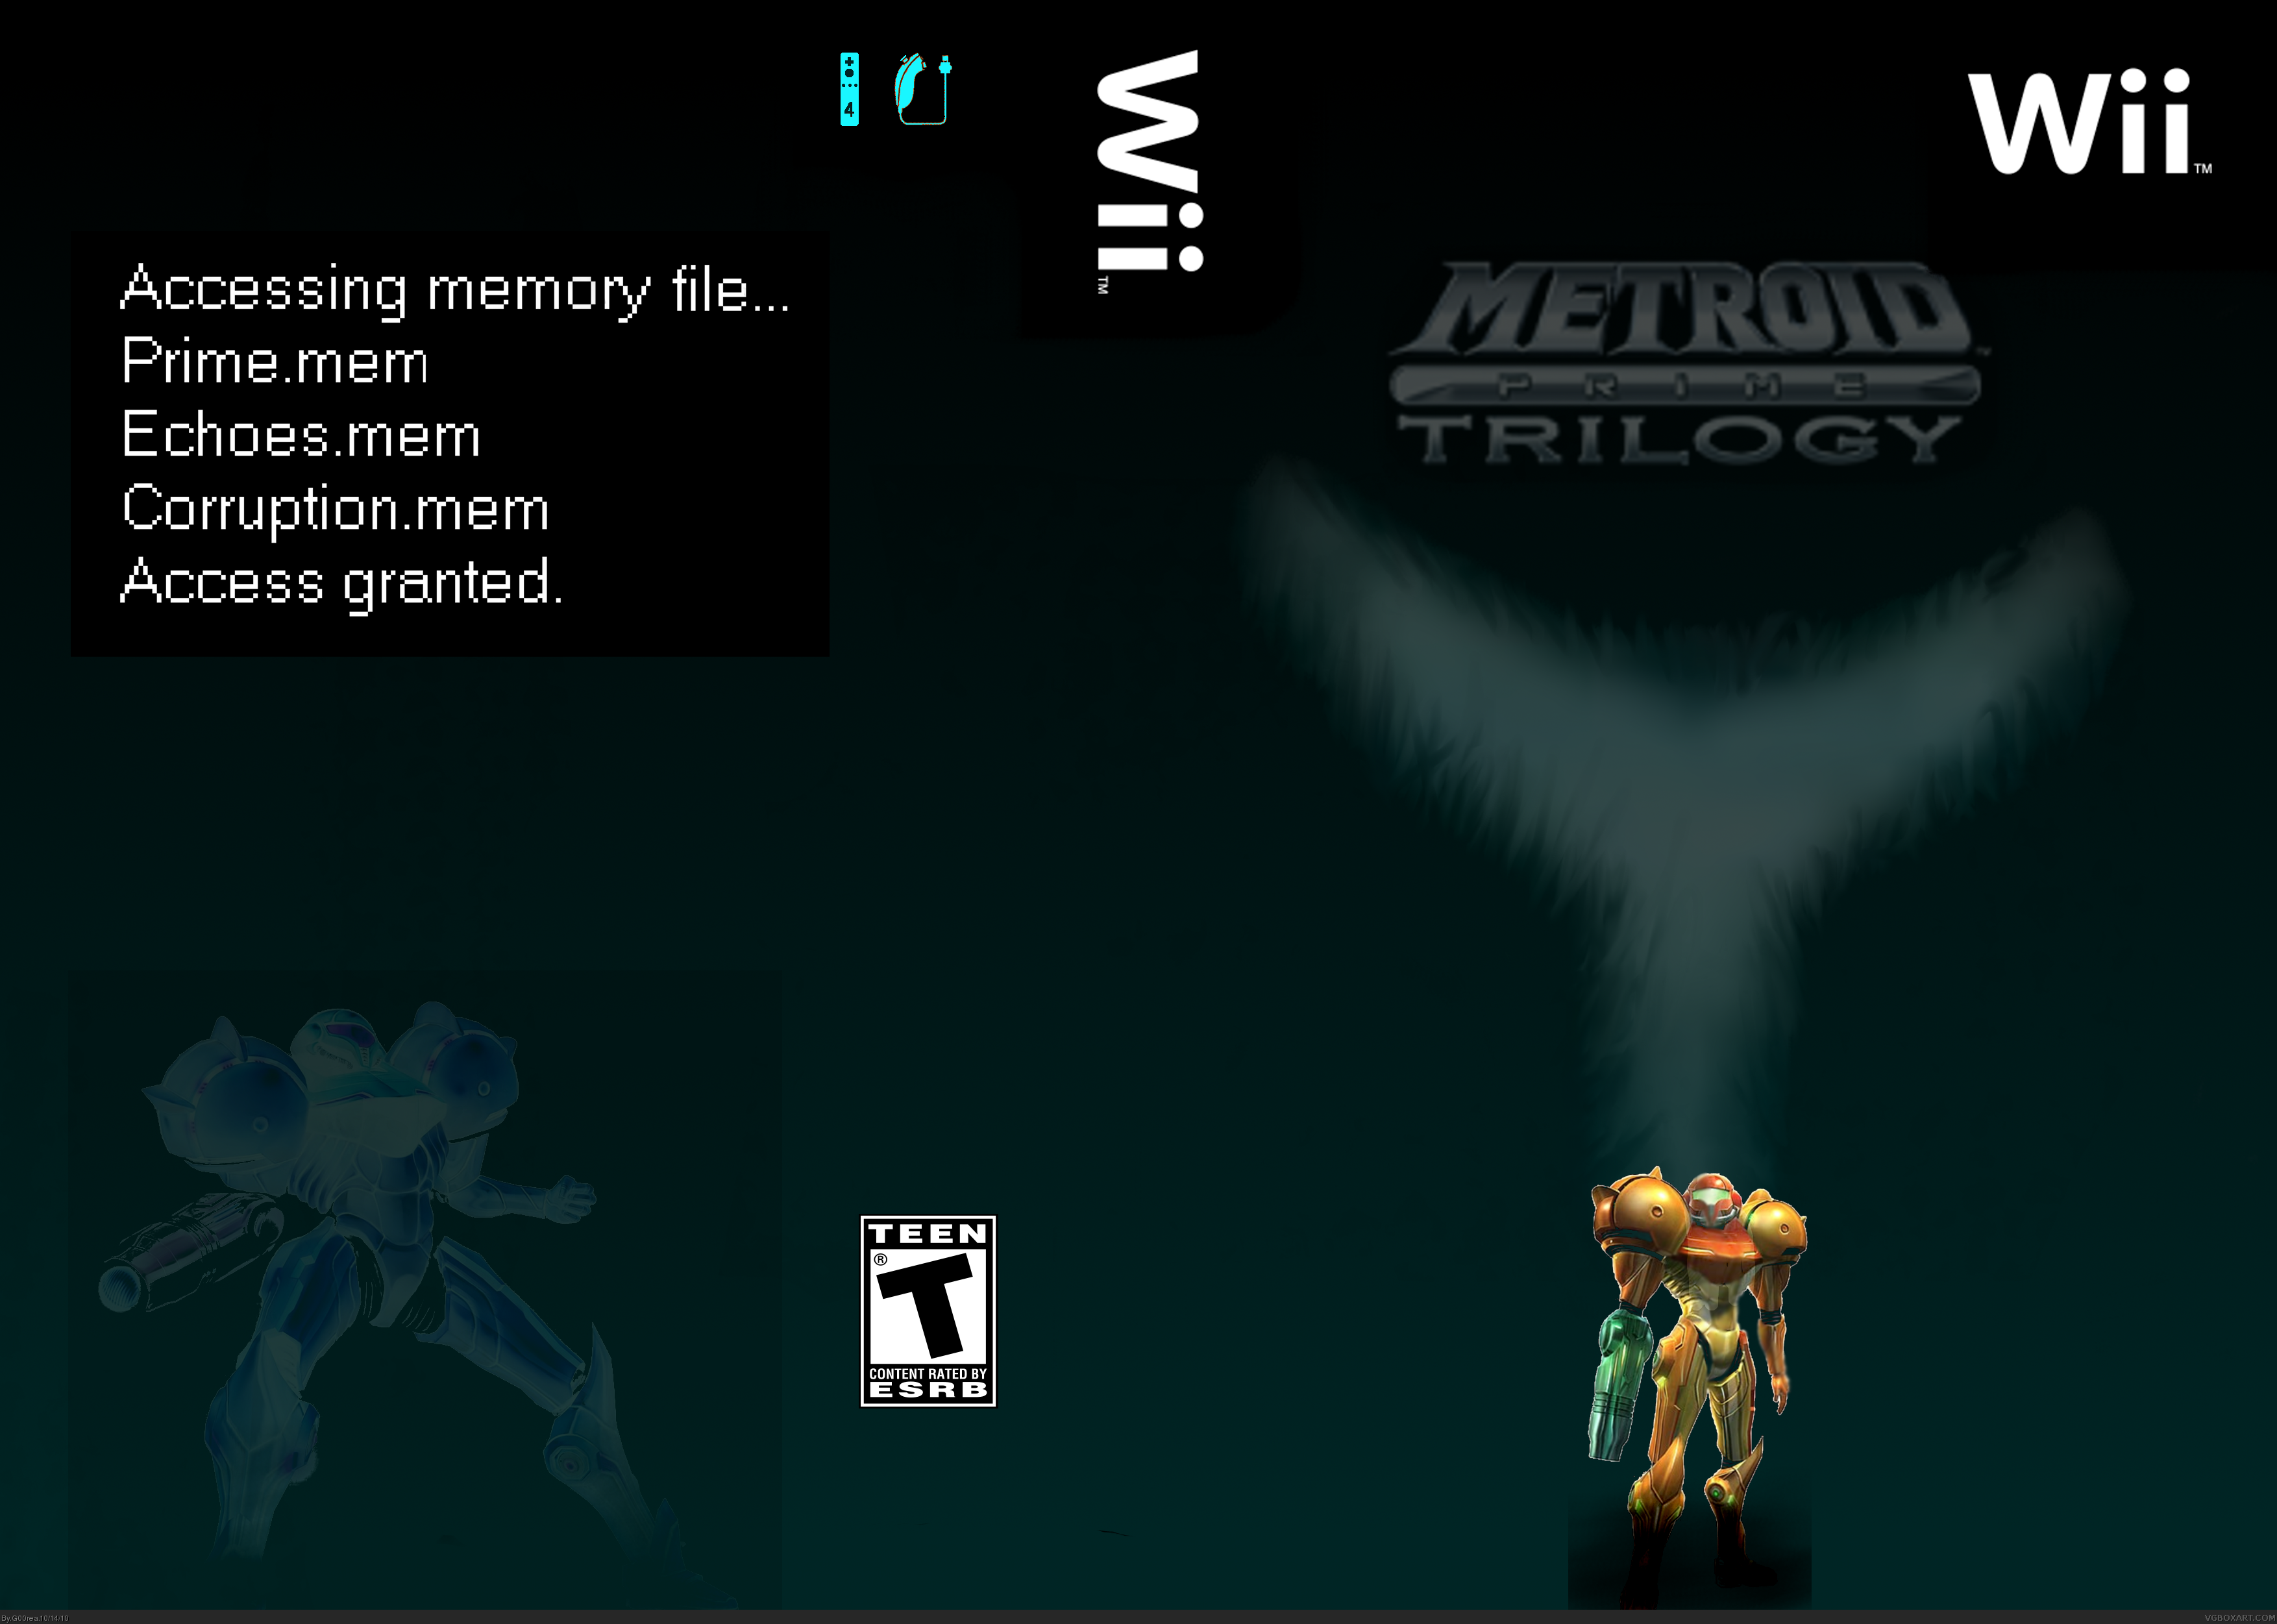 metroid prime trilogy iso loading screen broke